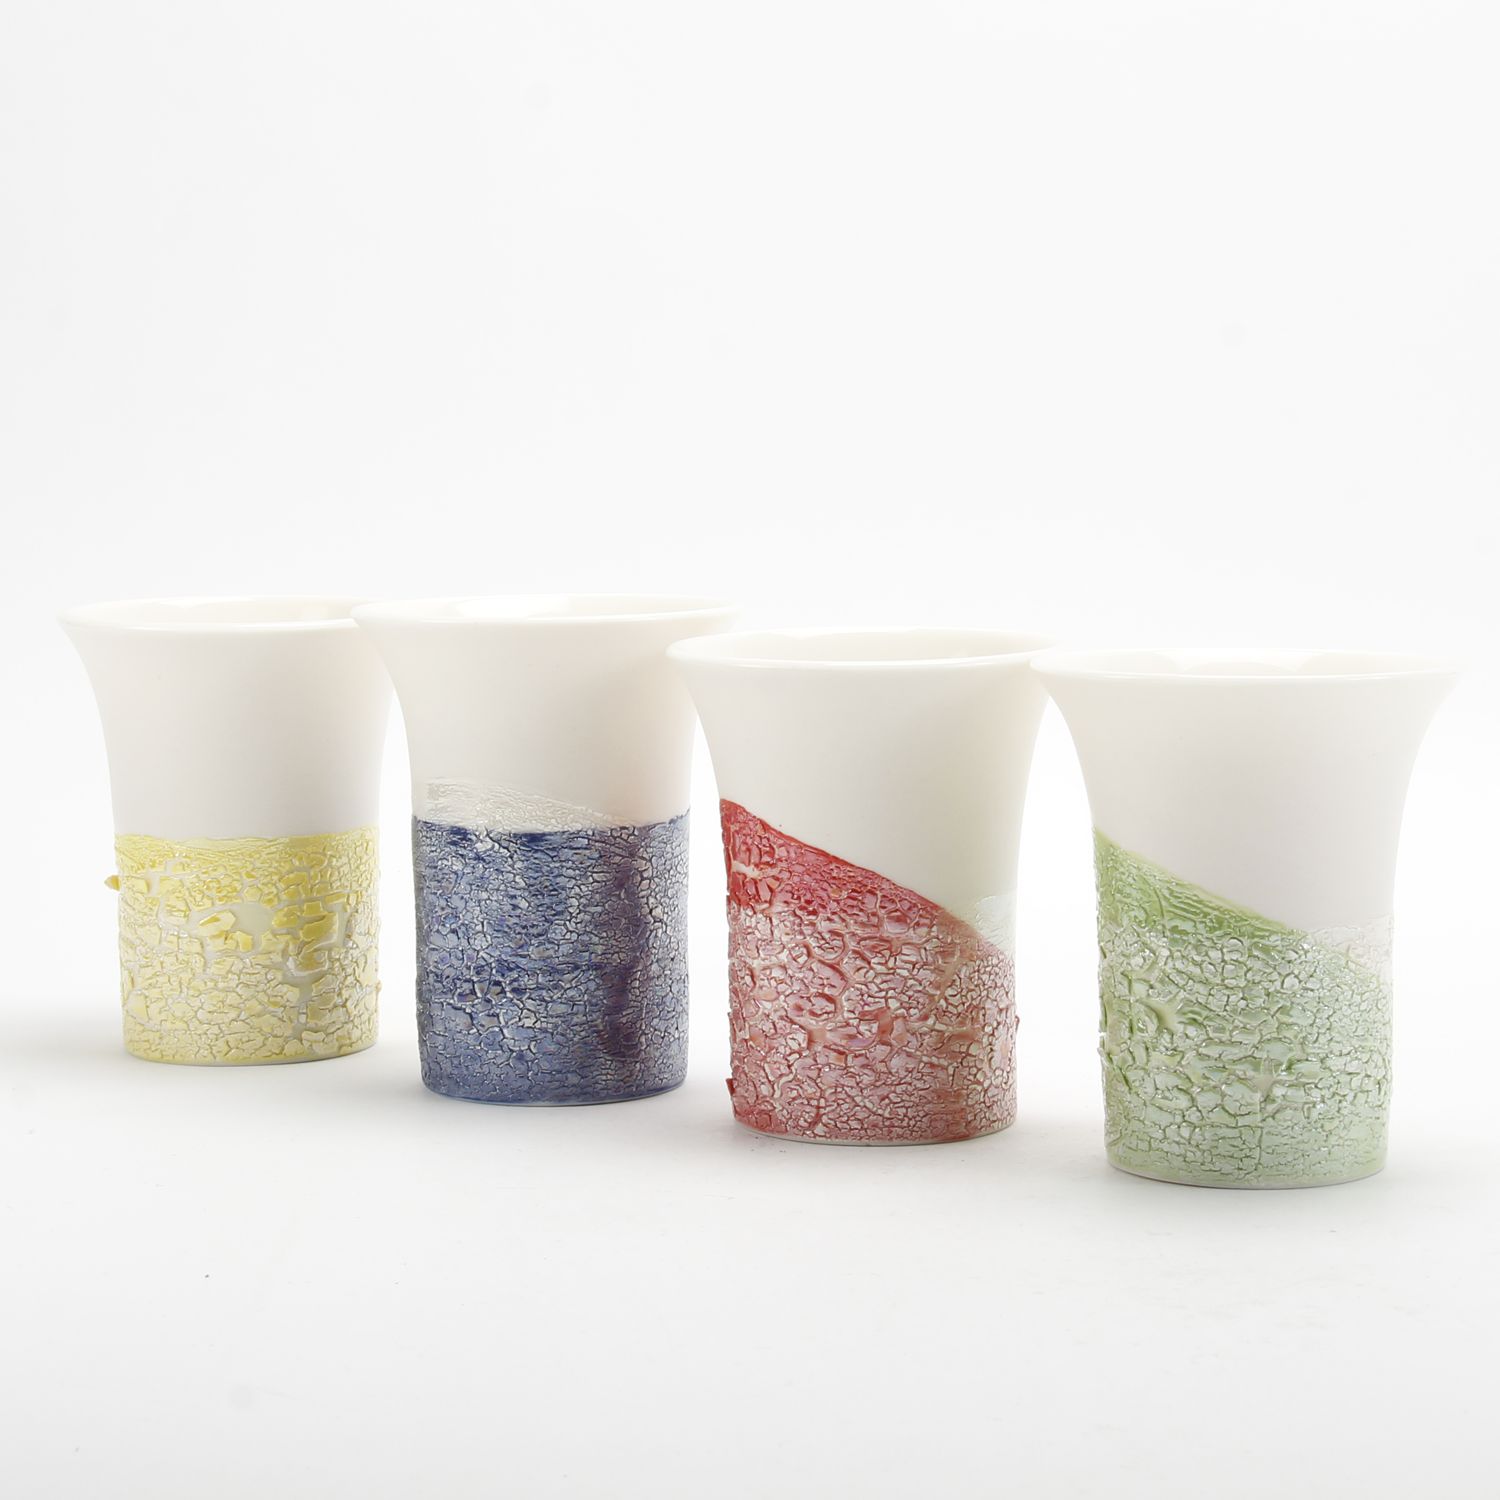 Cuir Ceramics: Cup/Vase Product Image 1 of 4